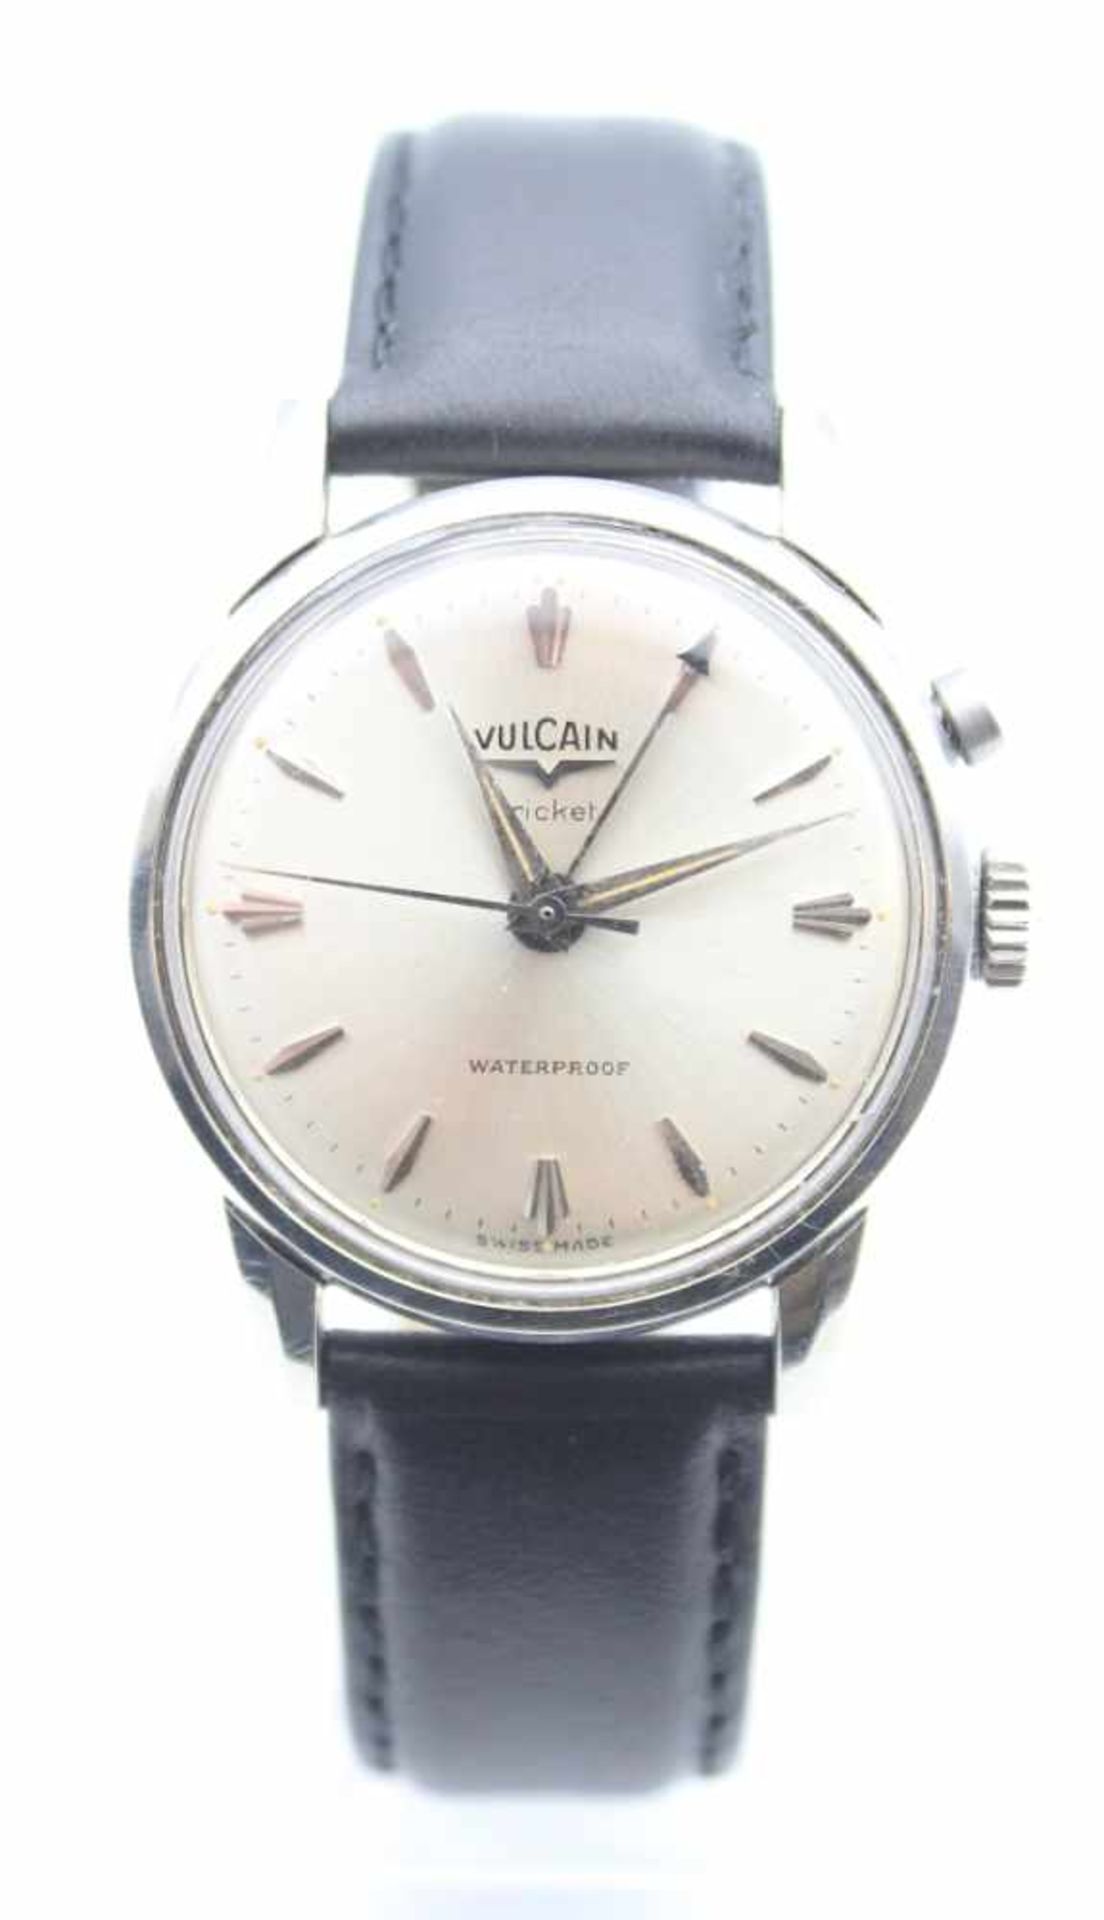 Armbanduhr - Marke Vulcain Watch Co. Modell Crichet, waterproof, mit Weckvorrichtung, silberfarbenes